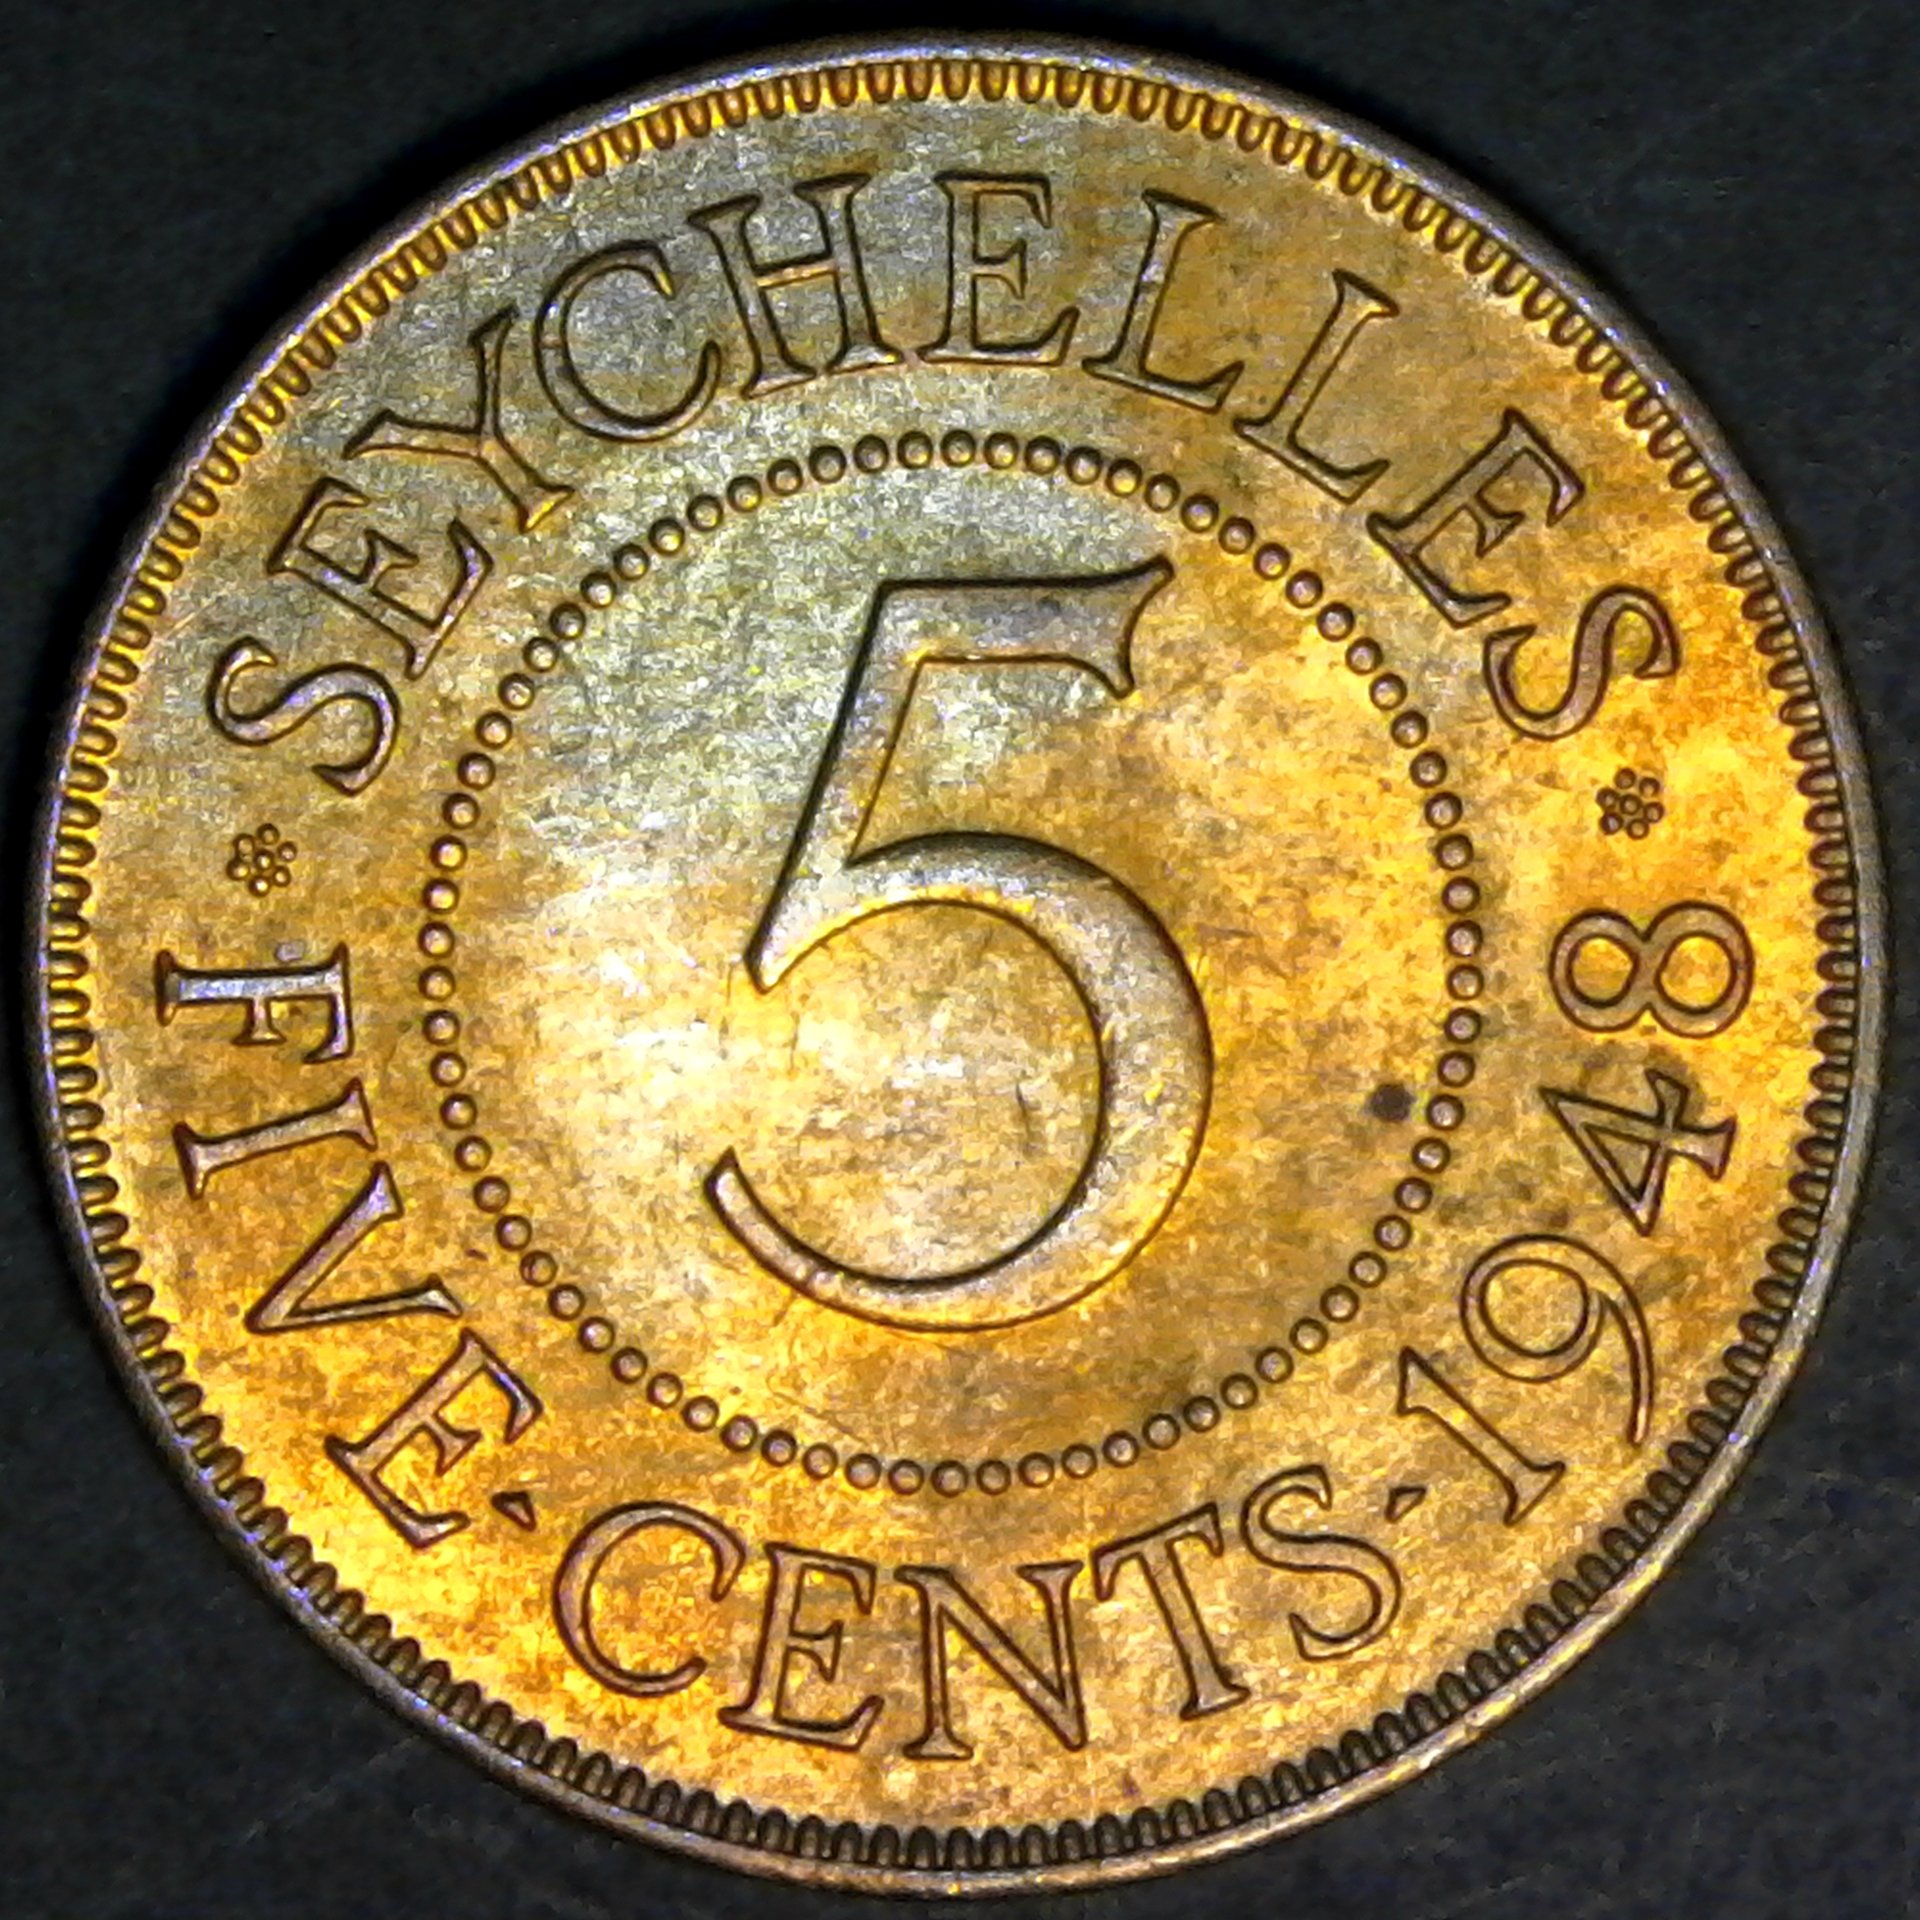 Seychelles Five Cents 1948 obverse.jpg